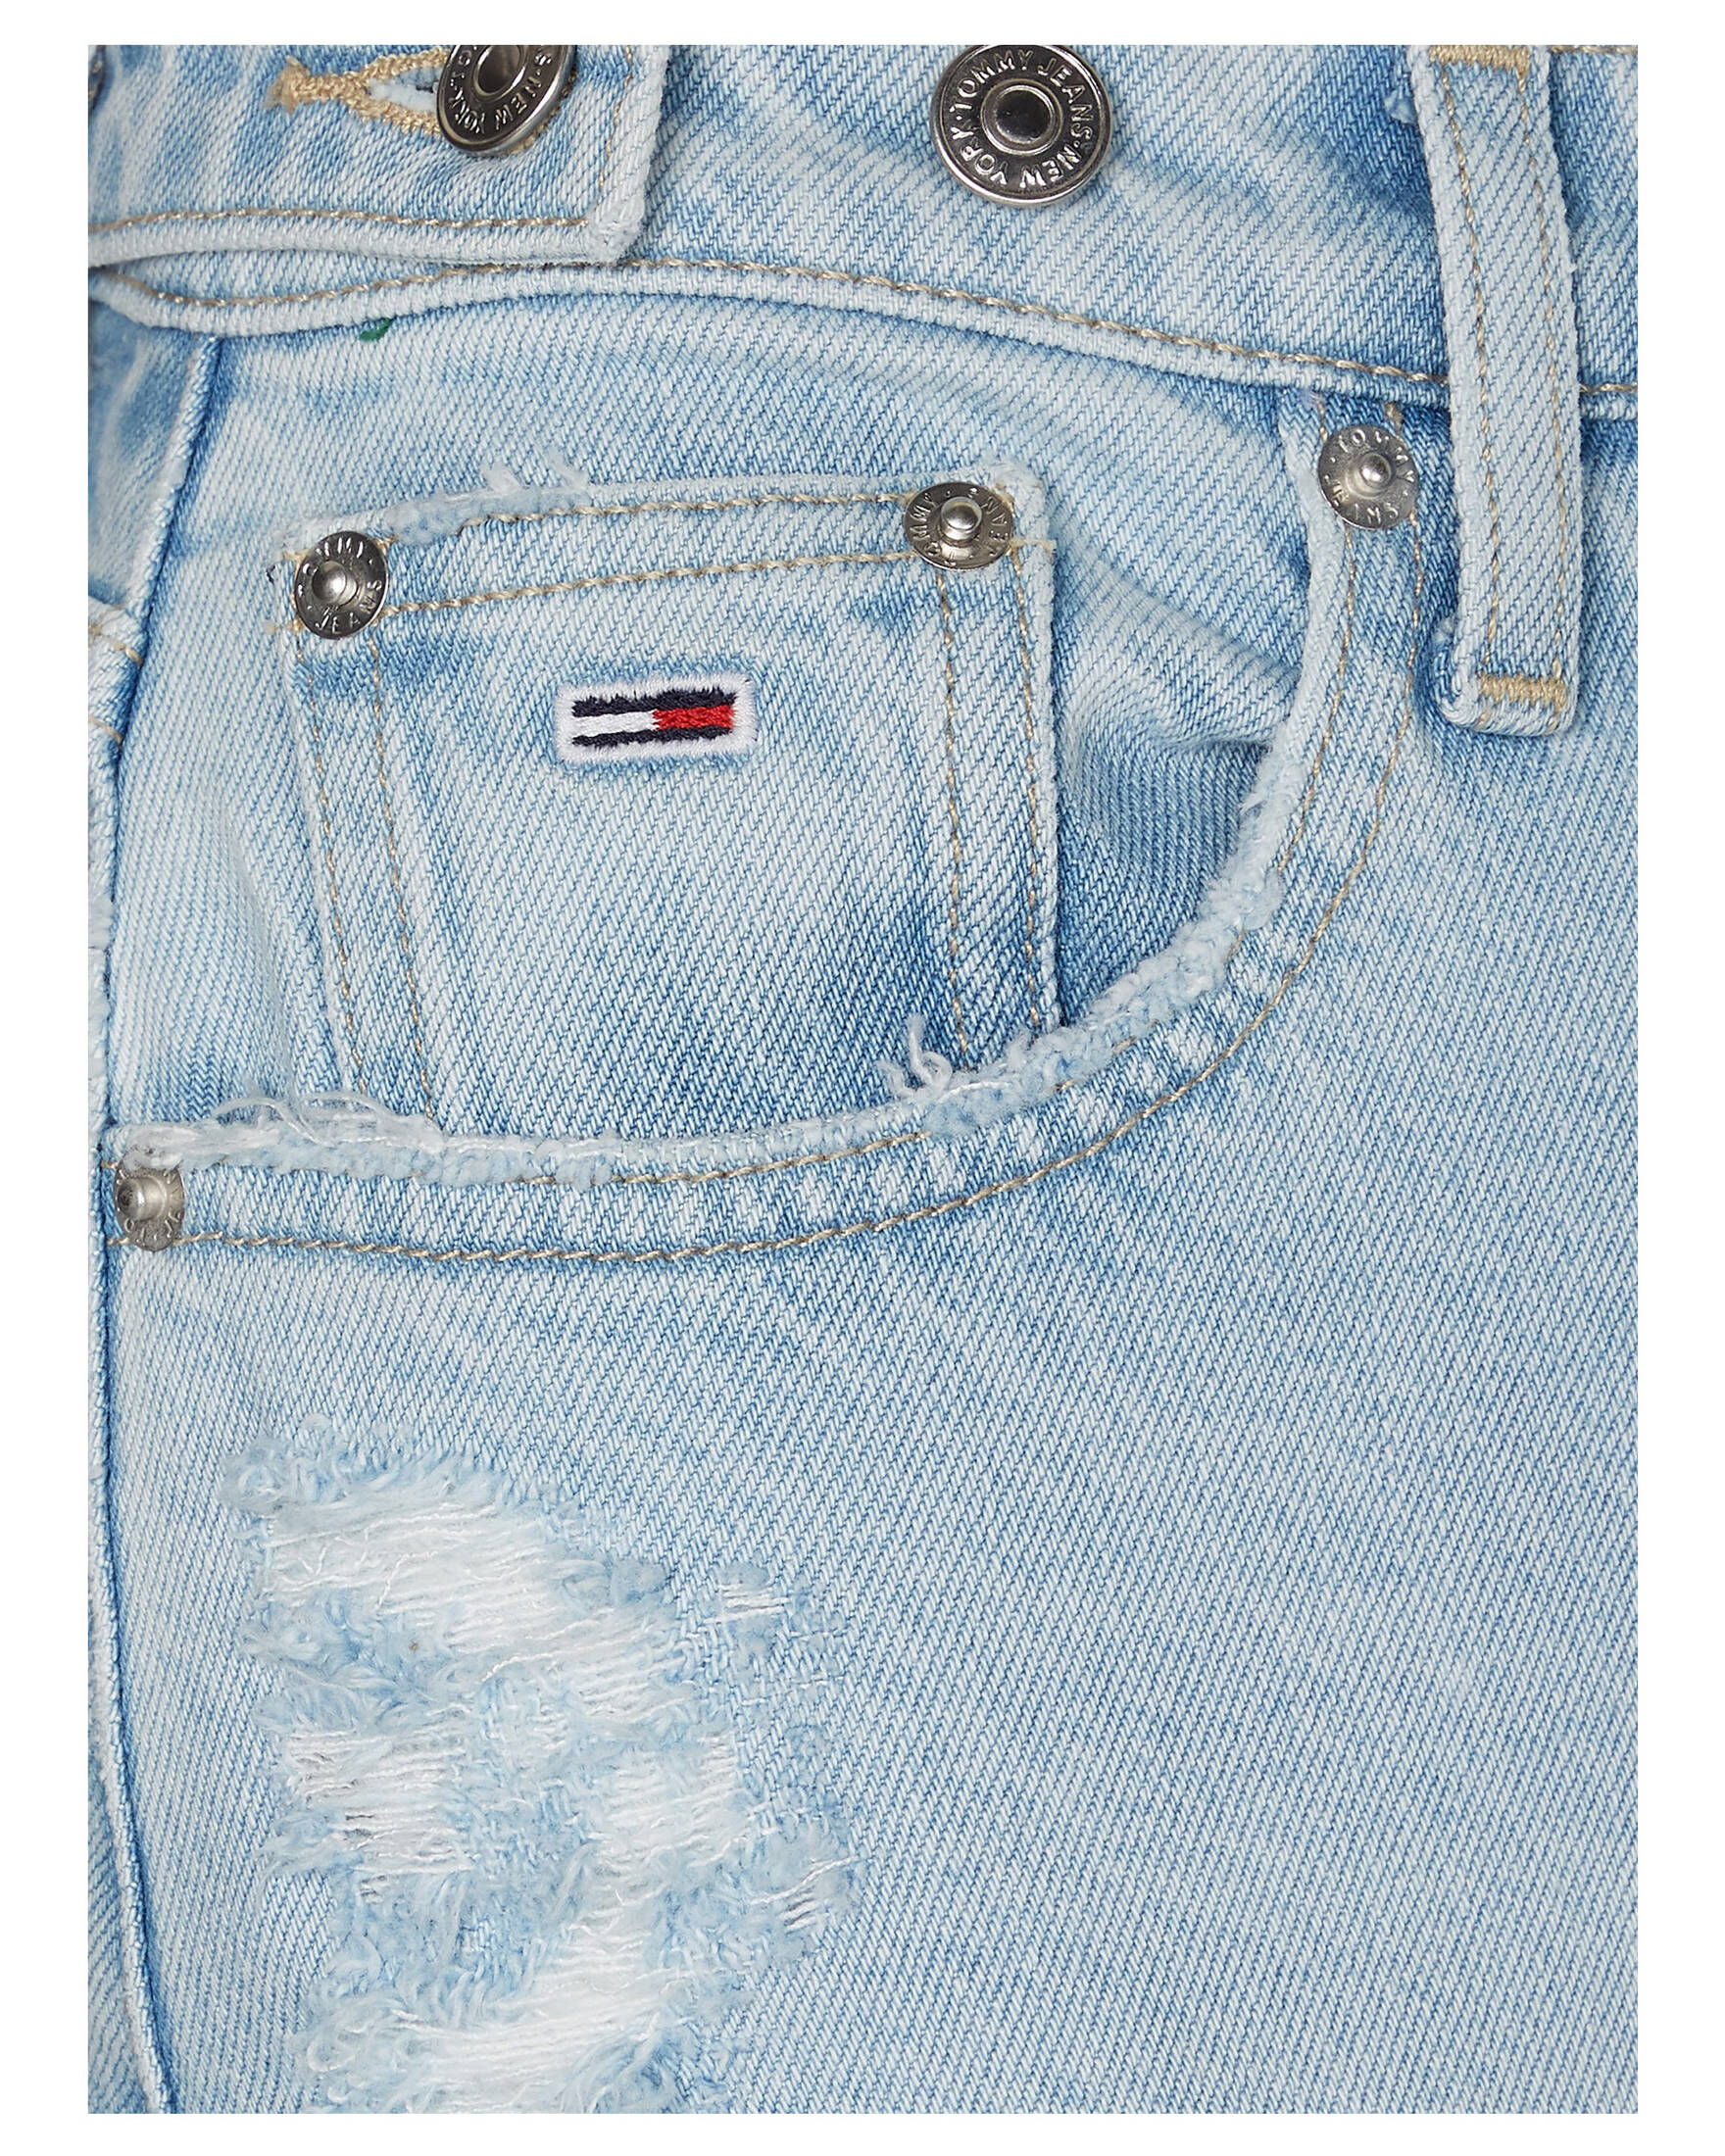 Tommy Jeans Damen Jeansrock MOM SKIRT kaufen | engelhorn